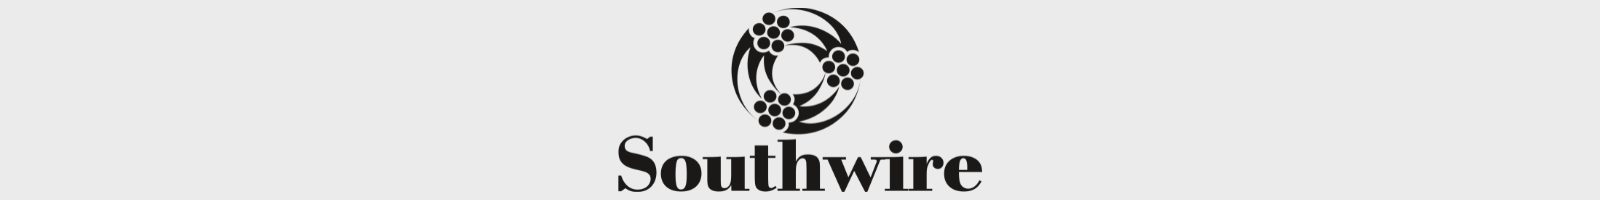 logo southwire